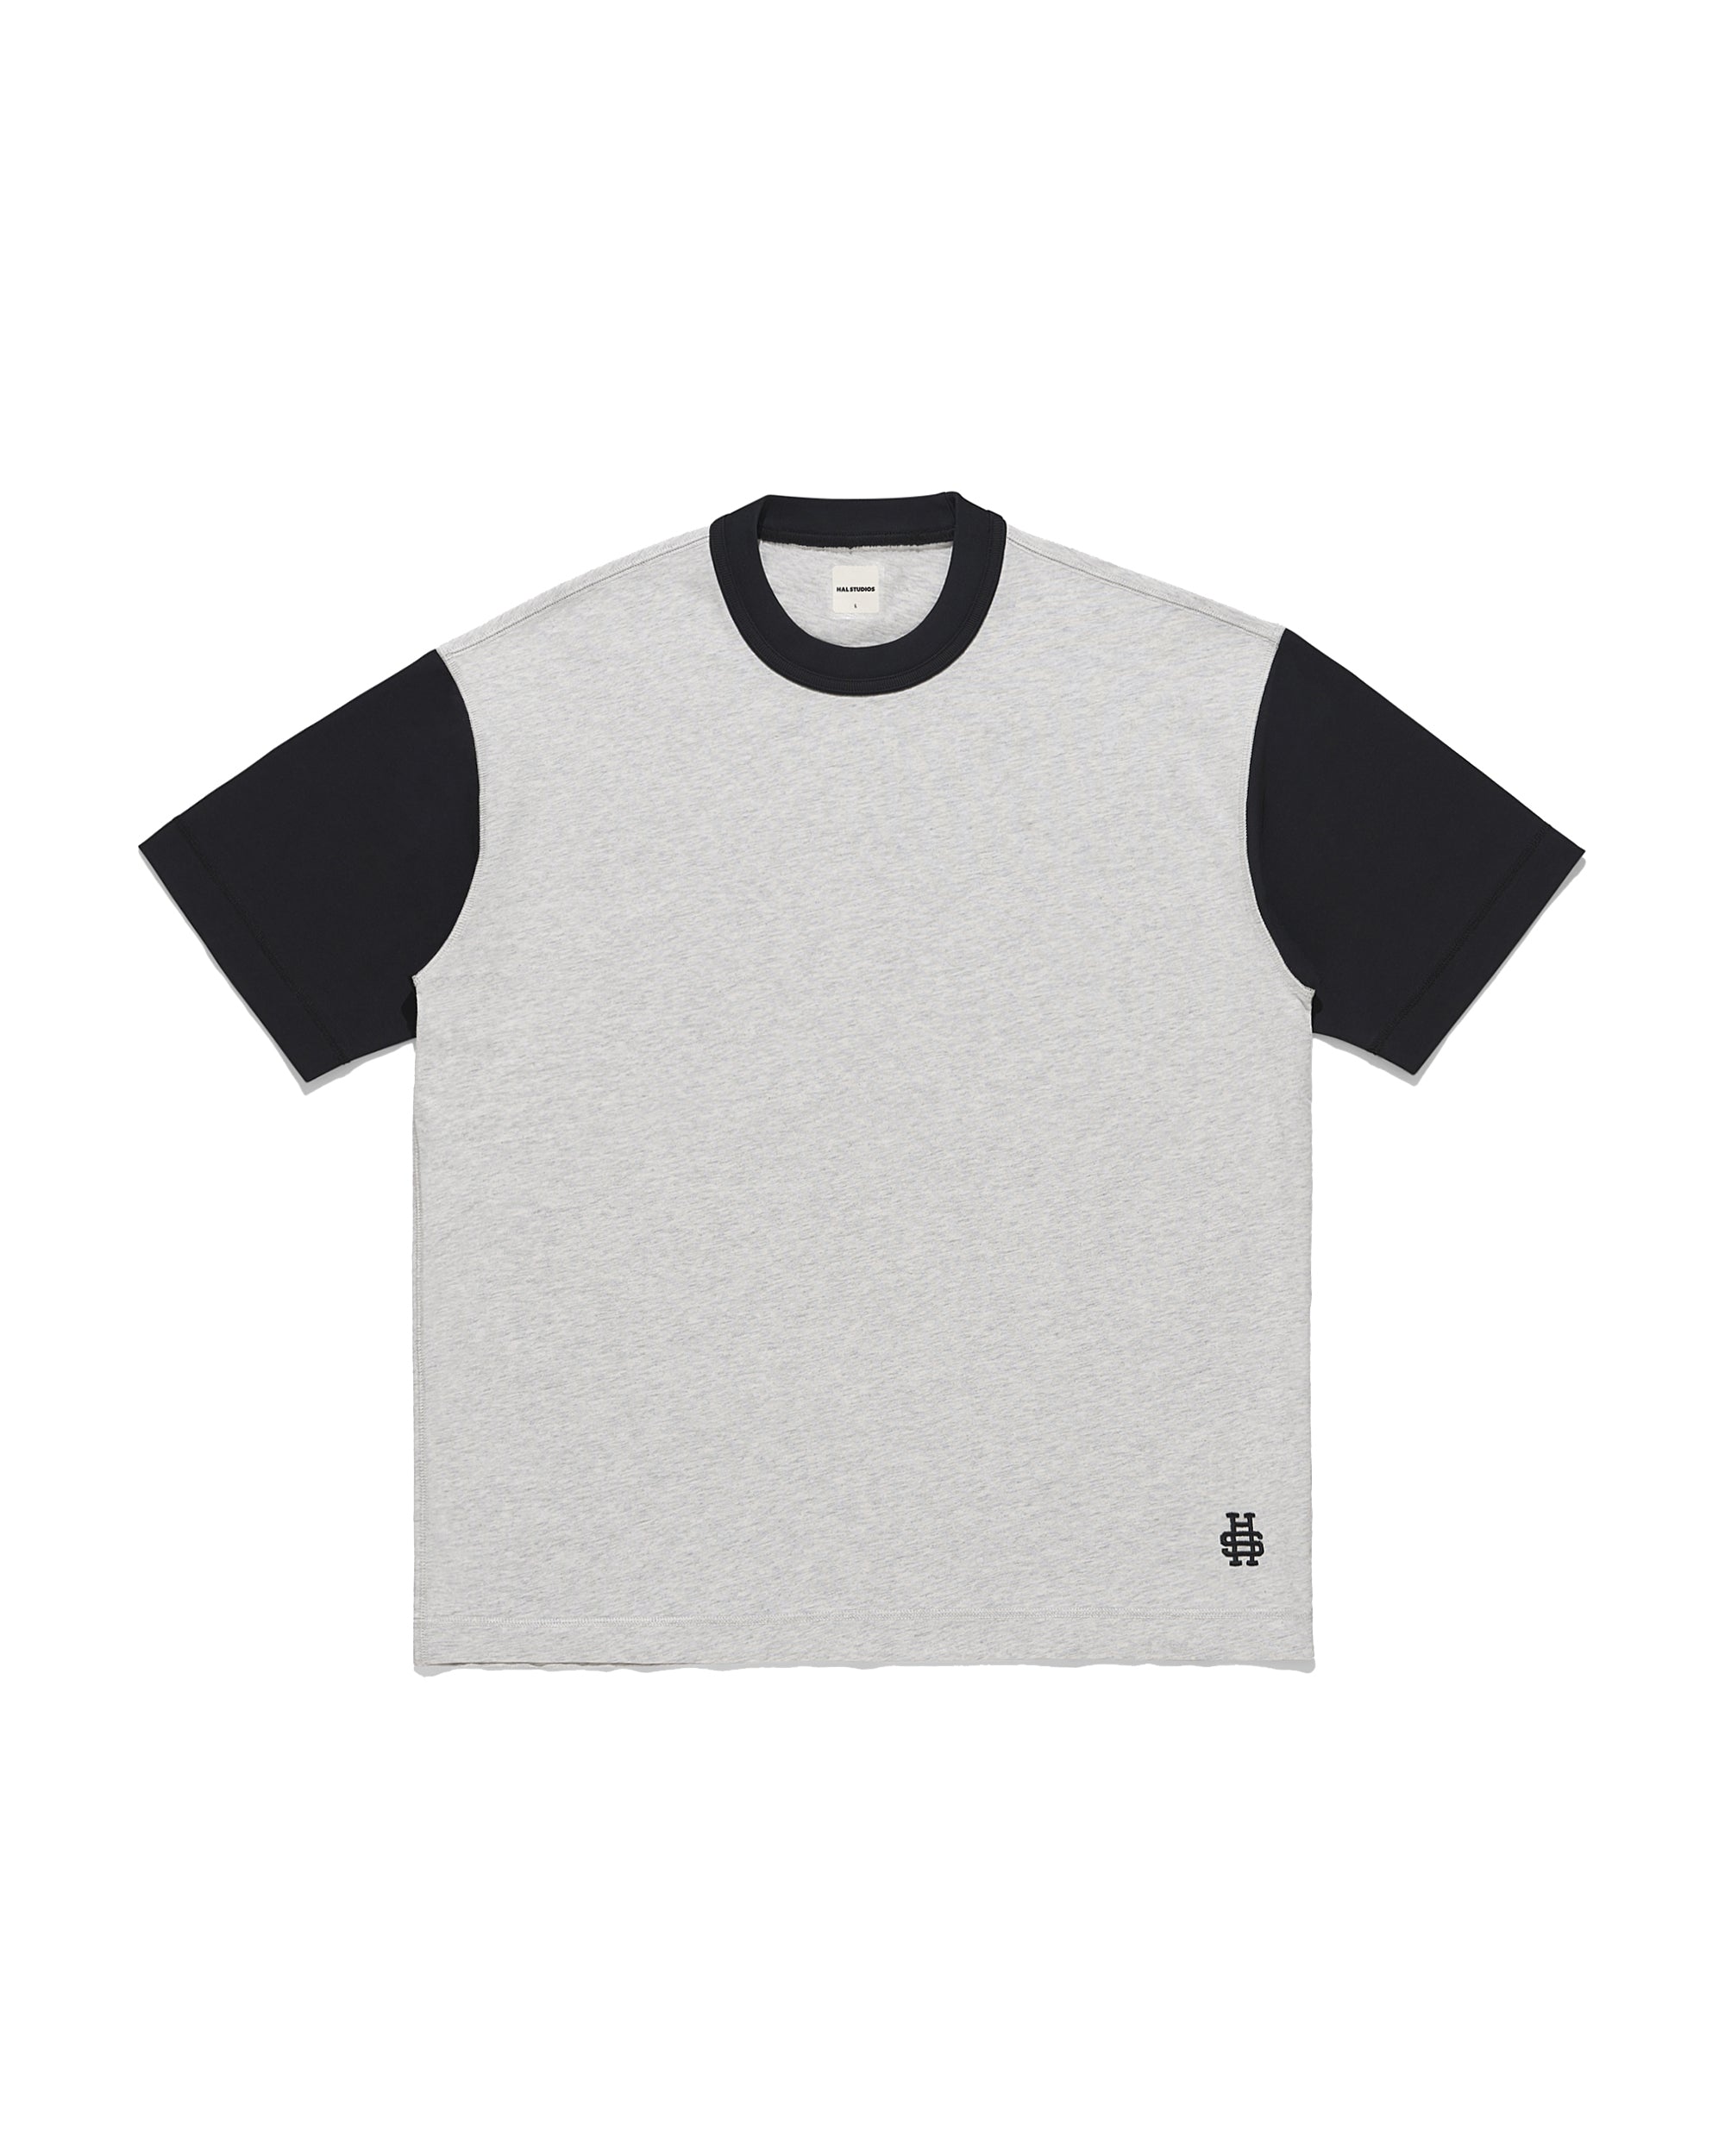 Athletic T-Shirt - Grey / Black